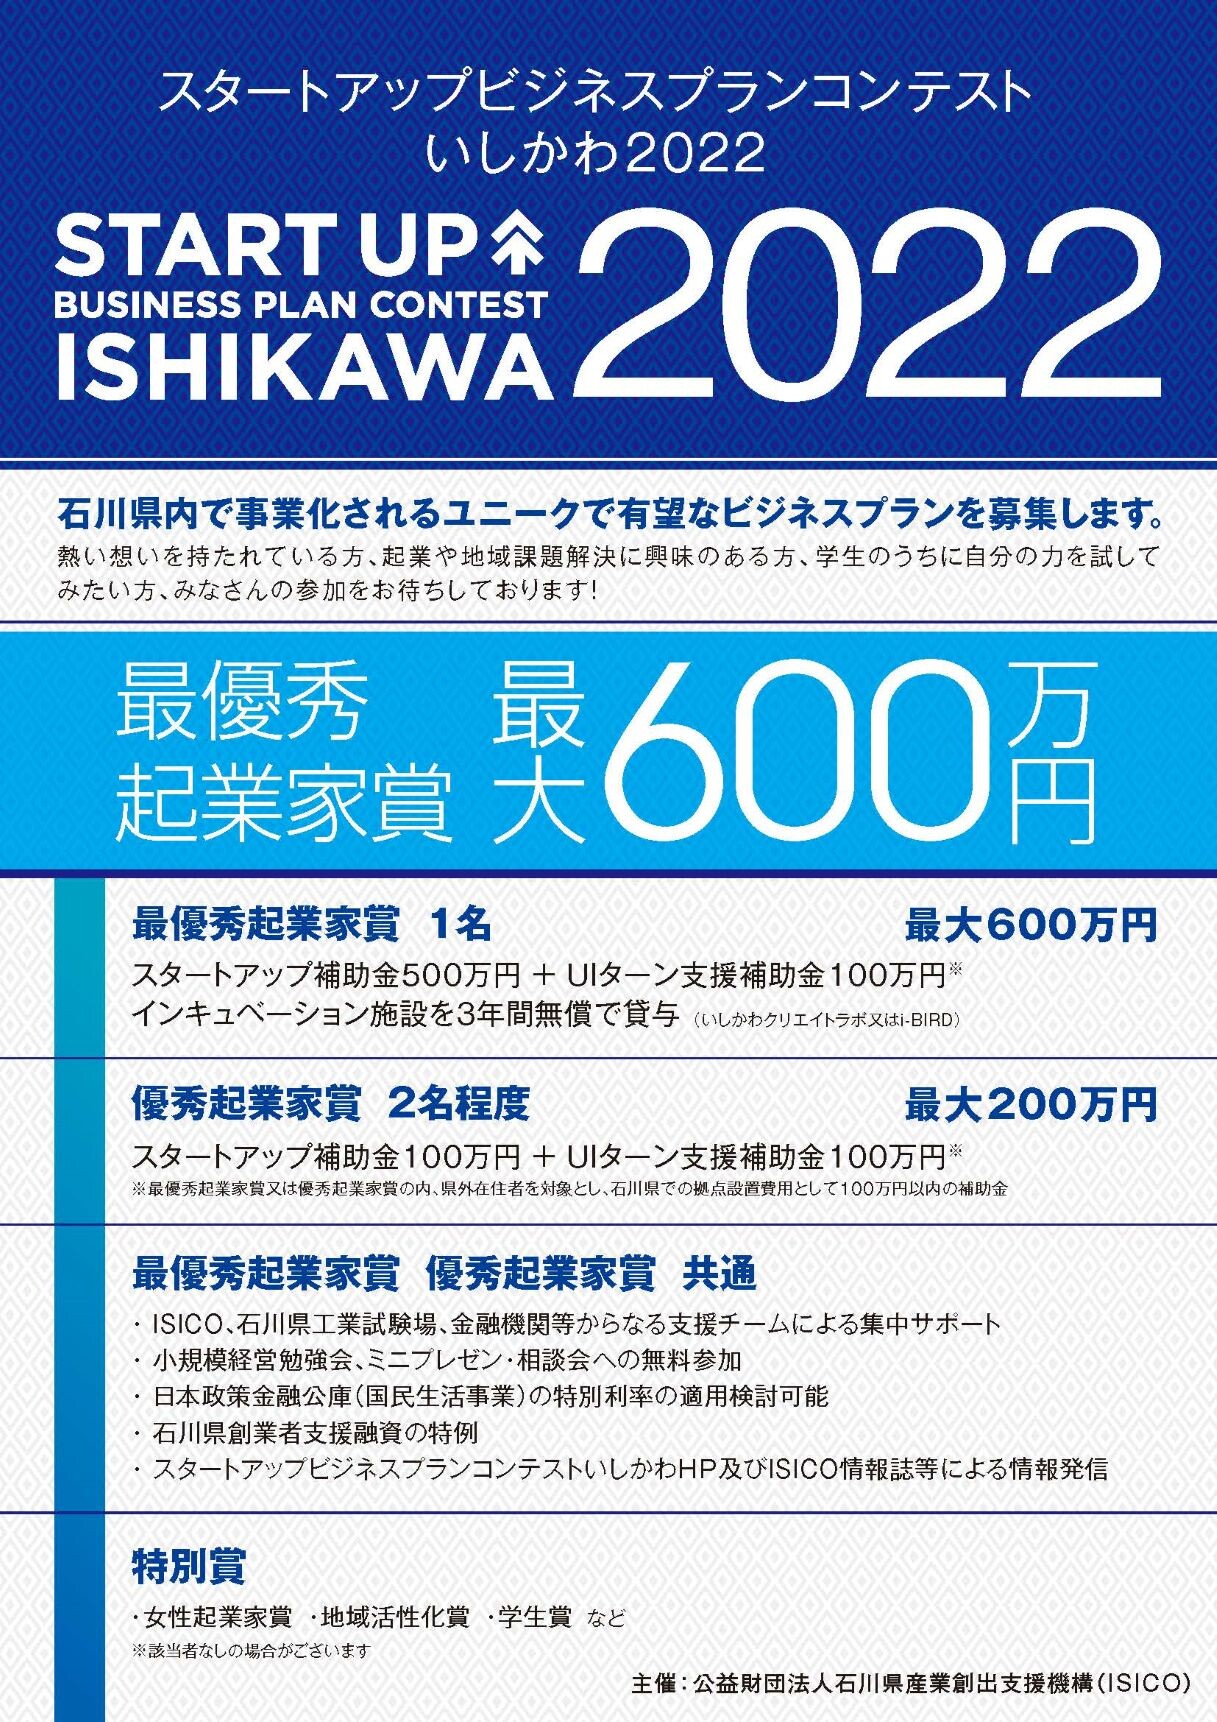 https://o-fsi.w3.kanazawa-u.ac.jp/about/vbl2/vbl1/vbl/update/startupishikawa2022.jpg